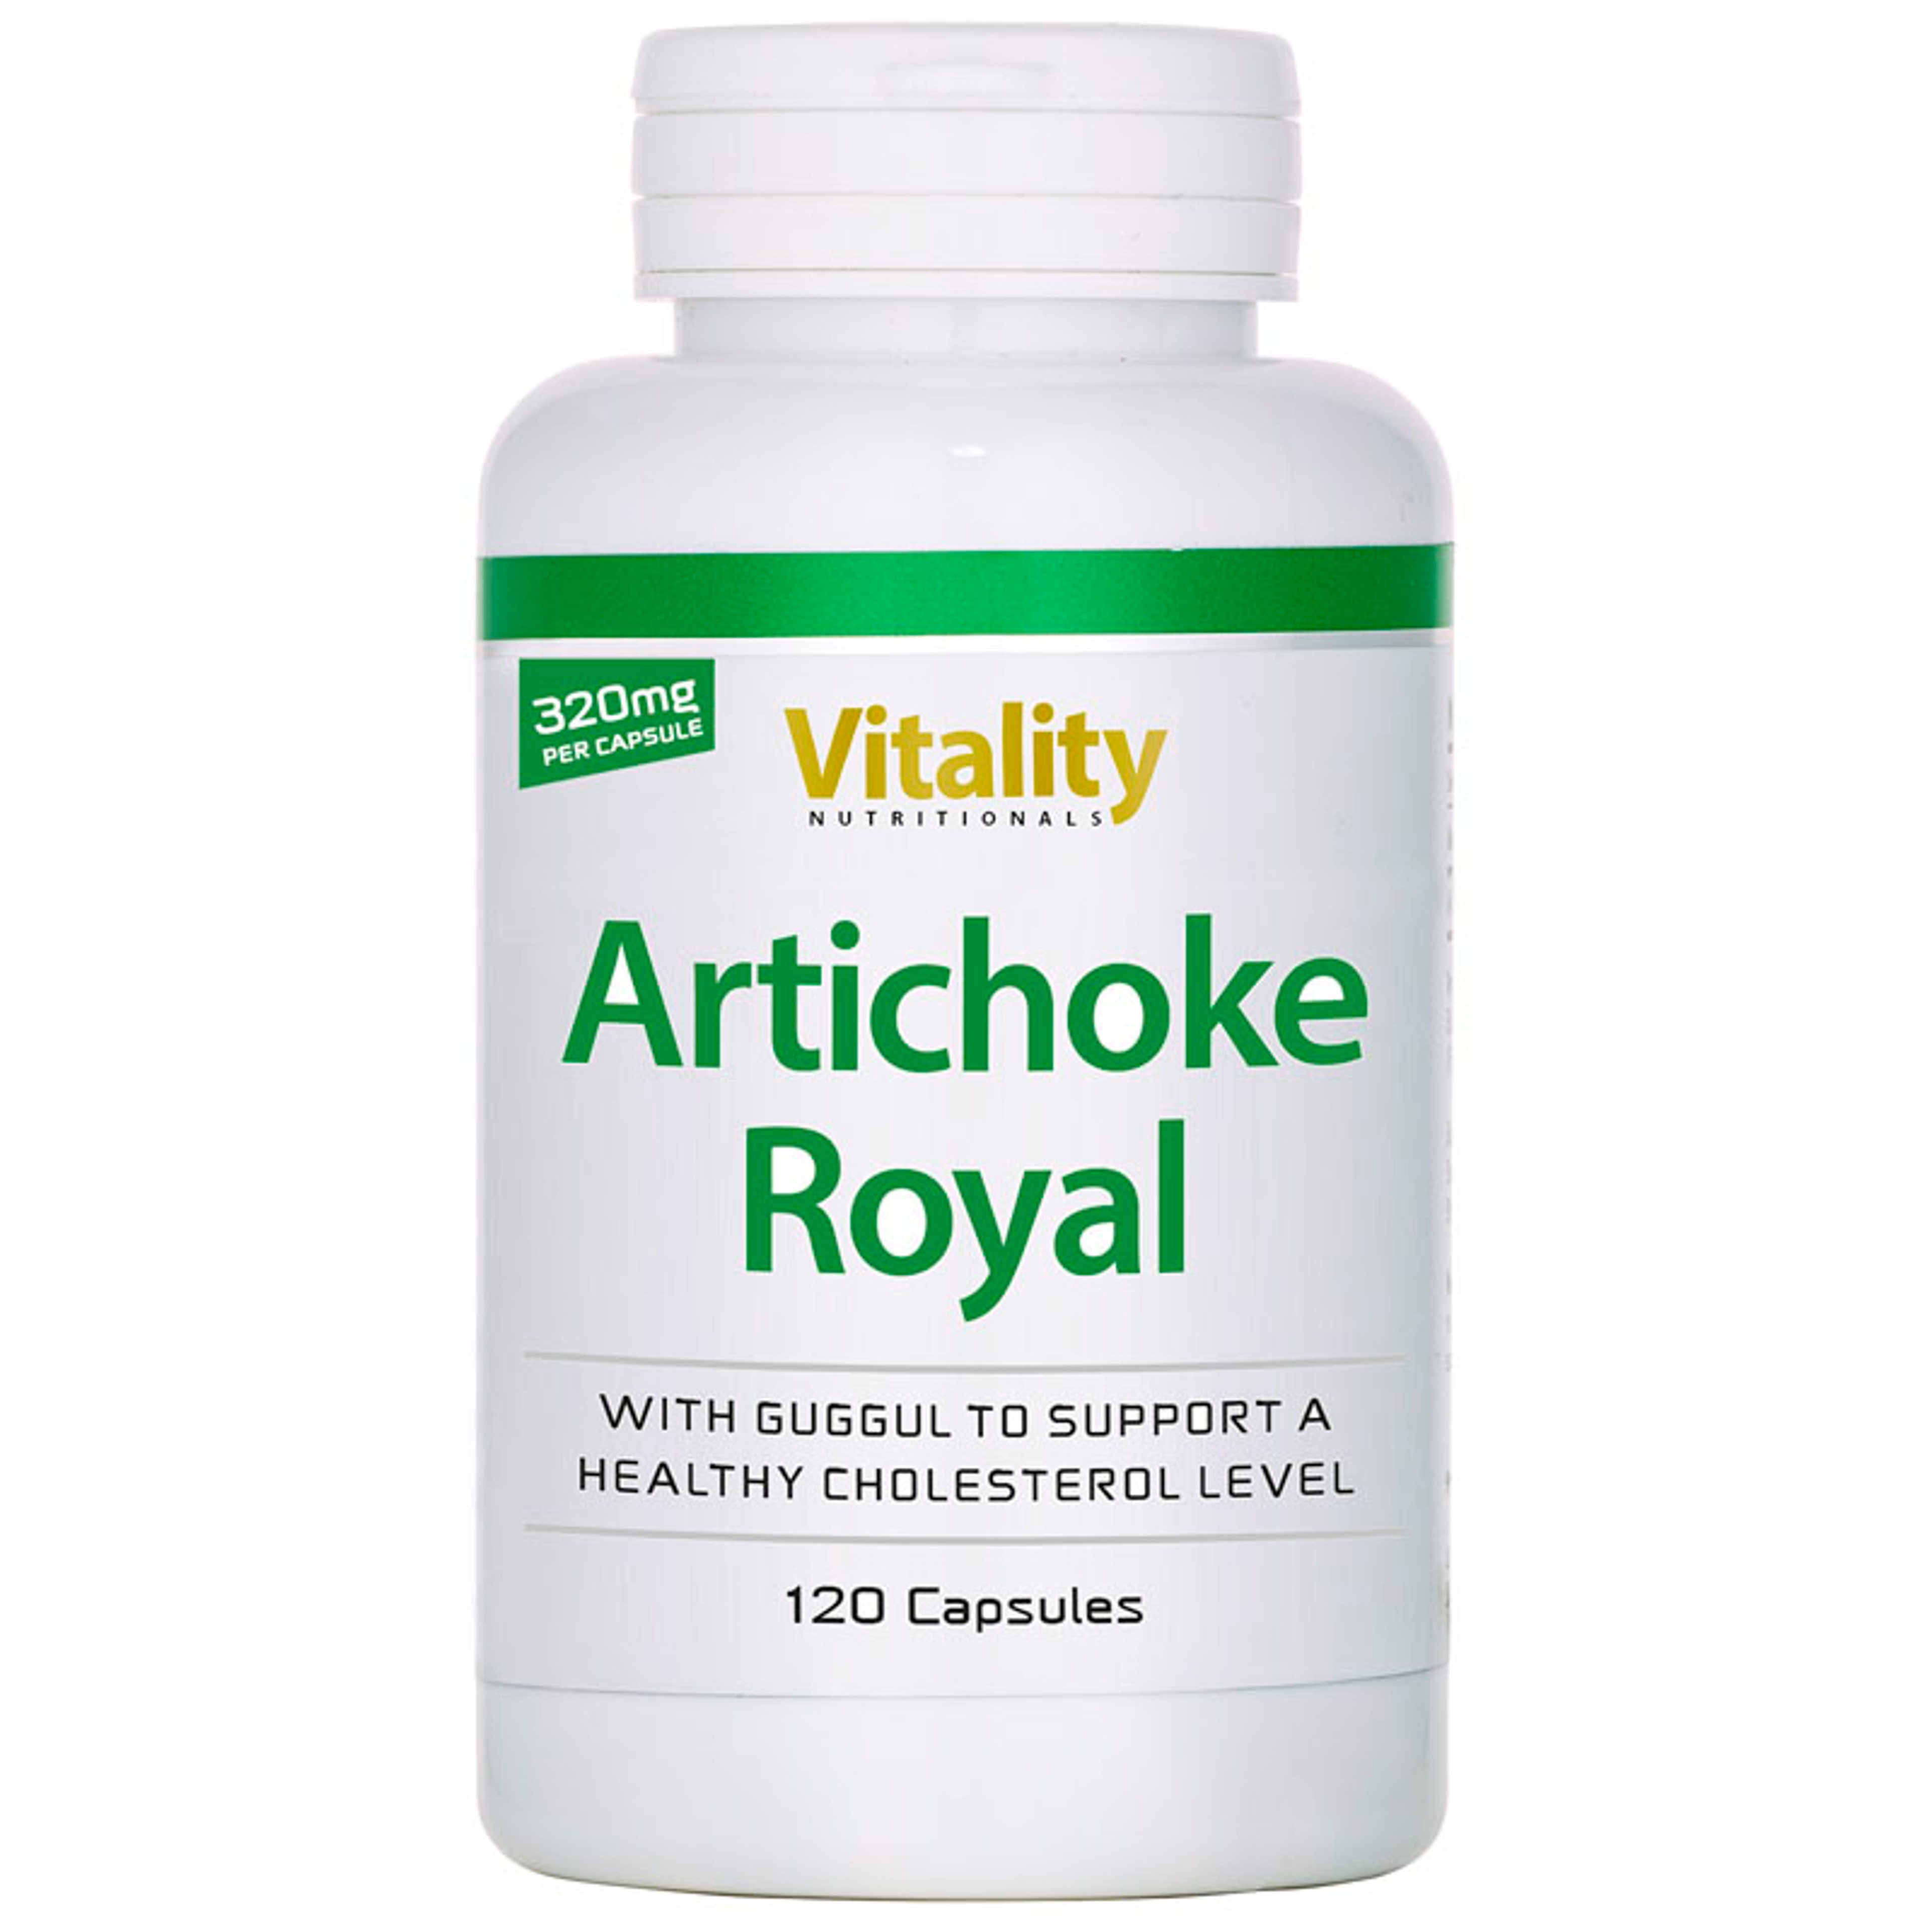 Vitality-Nutritionals-Artichoke-Royal_120capsules.jpg